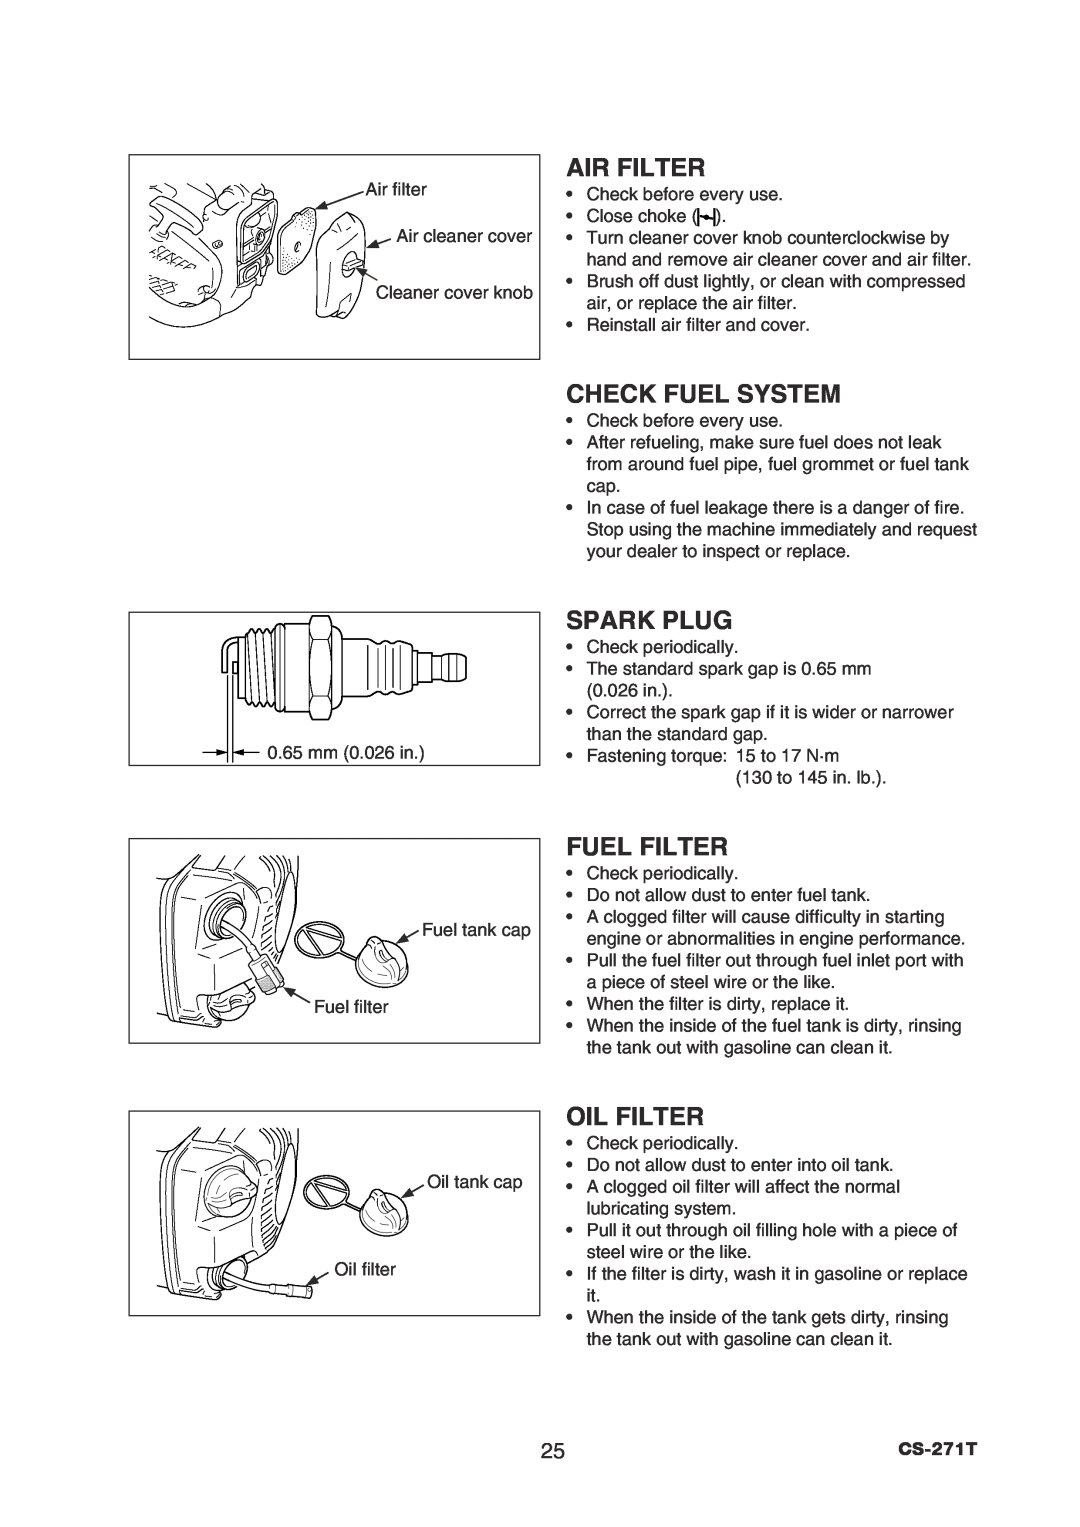 Echo CS-271T instruction manual Air Filter, Check Fuel System, Spark Plug, Fuel Filter, Oil Filter 